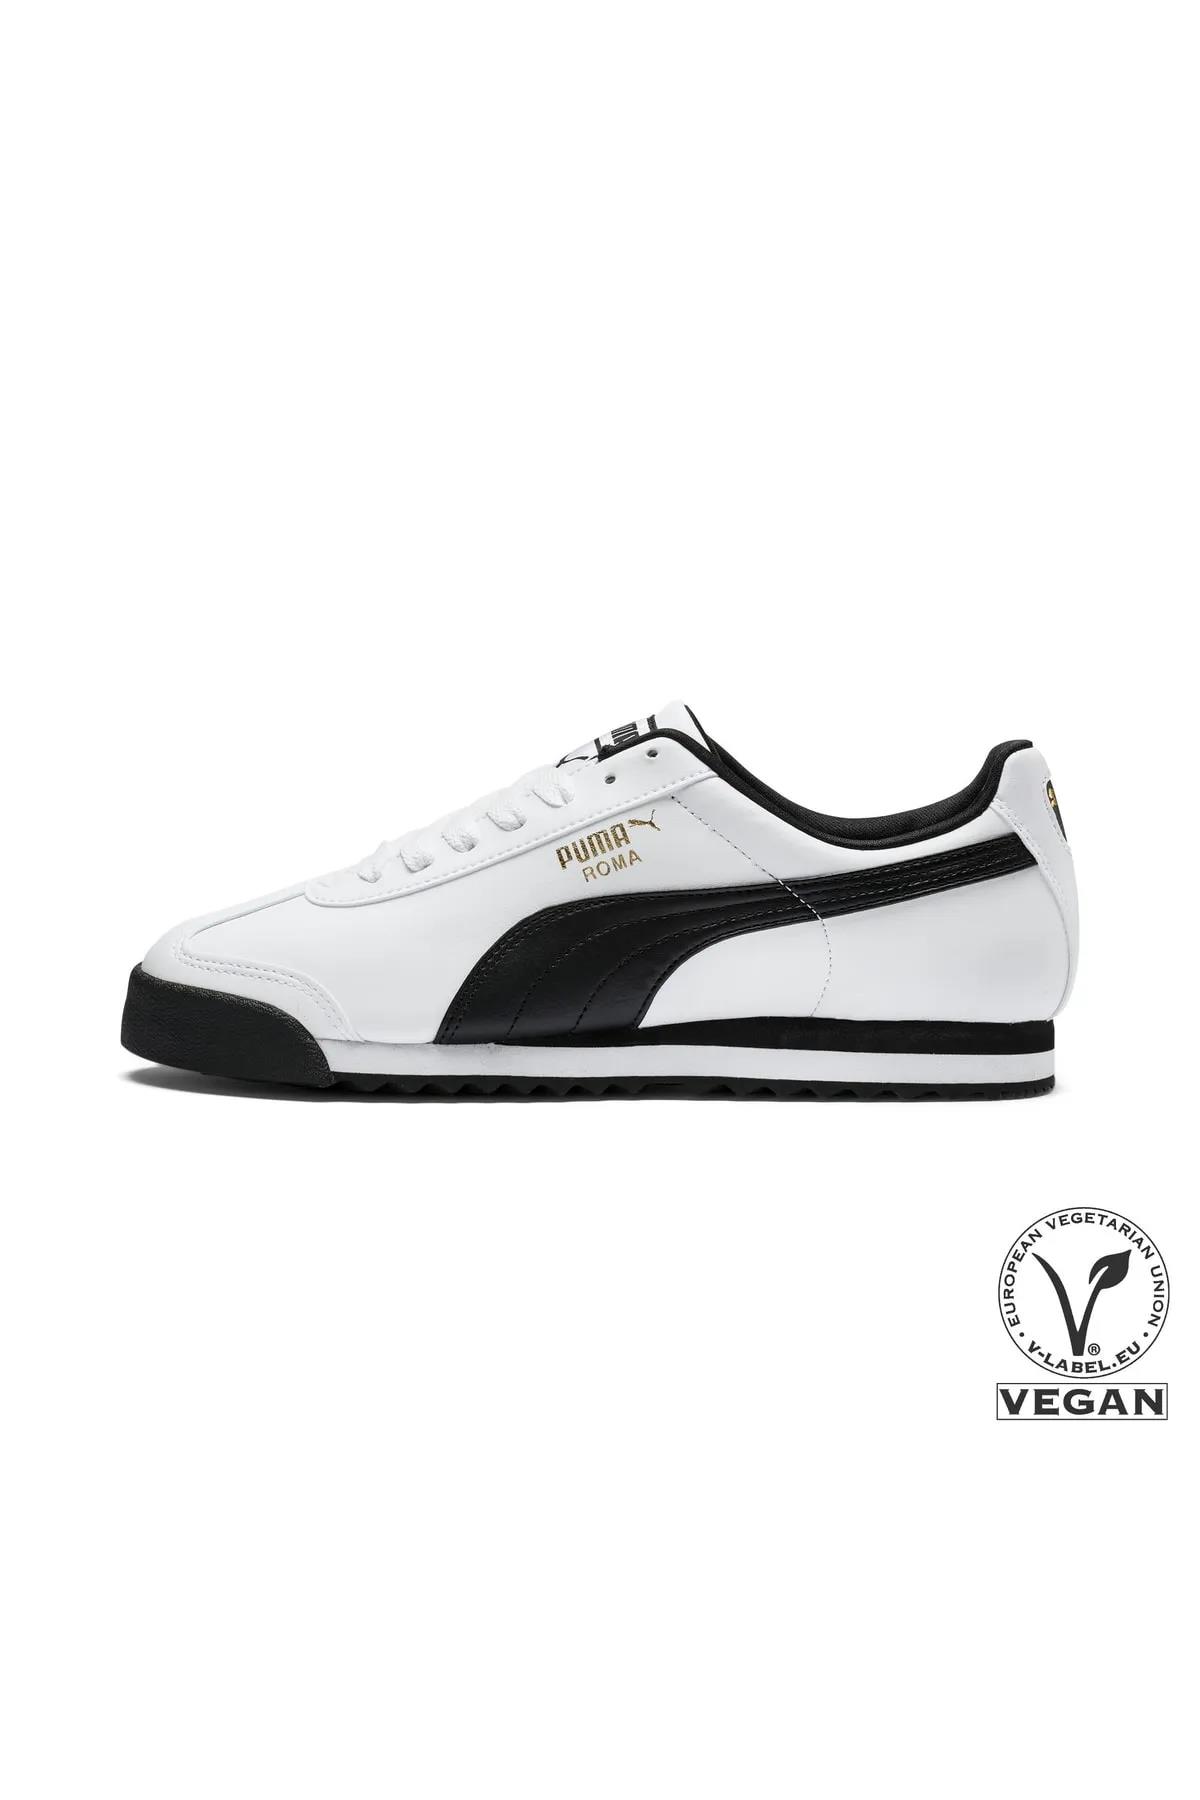 Puma 353572 Roma Basic Beyaz-Siyah Erkek Sneaker - Ayakmod